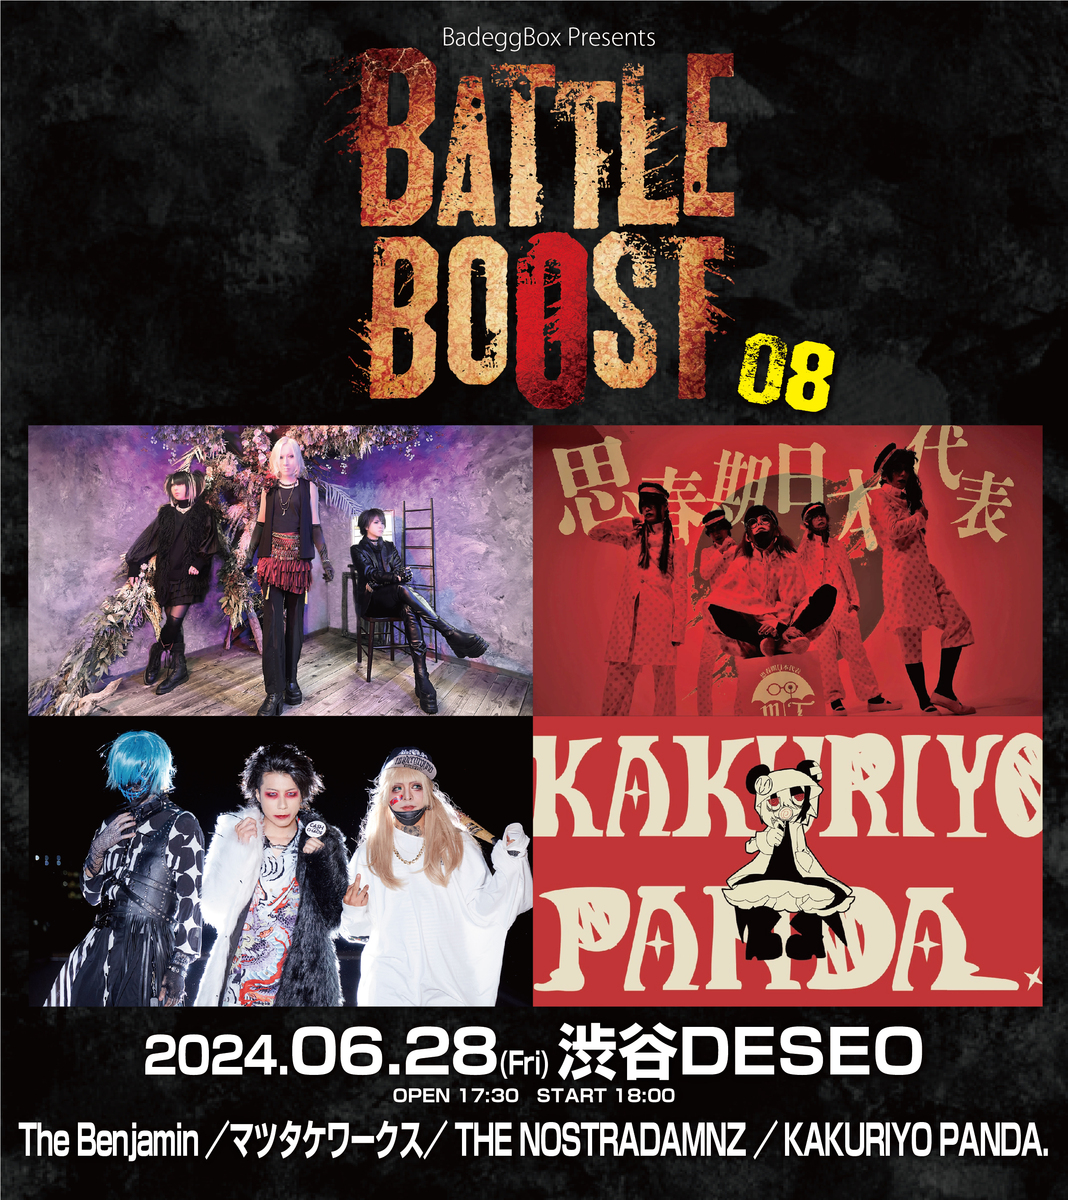 BadeggBox Presents「BATTLE BOOST」 08